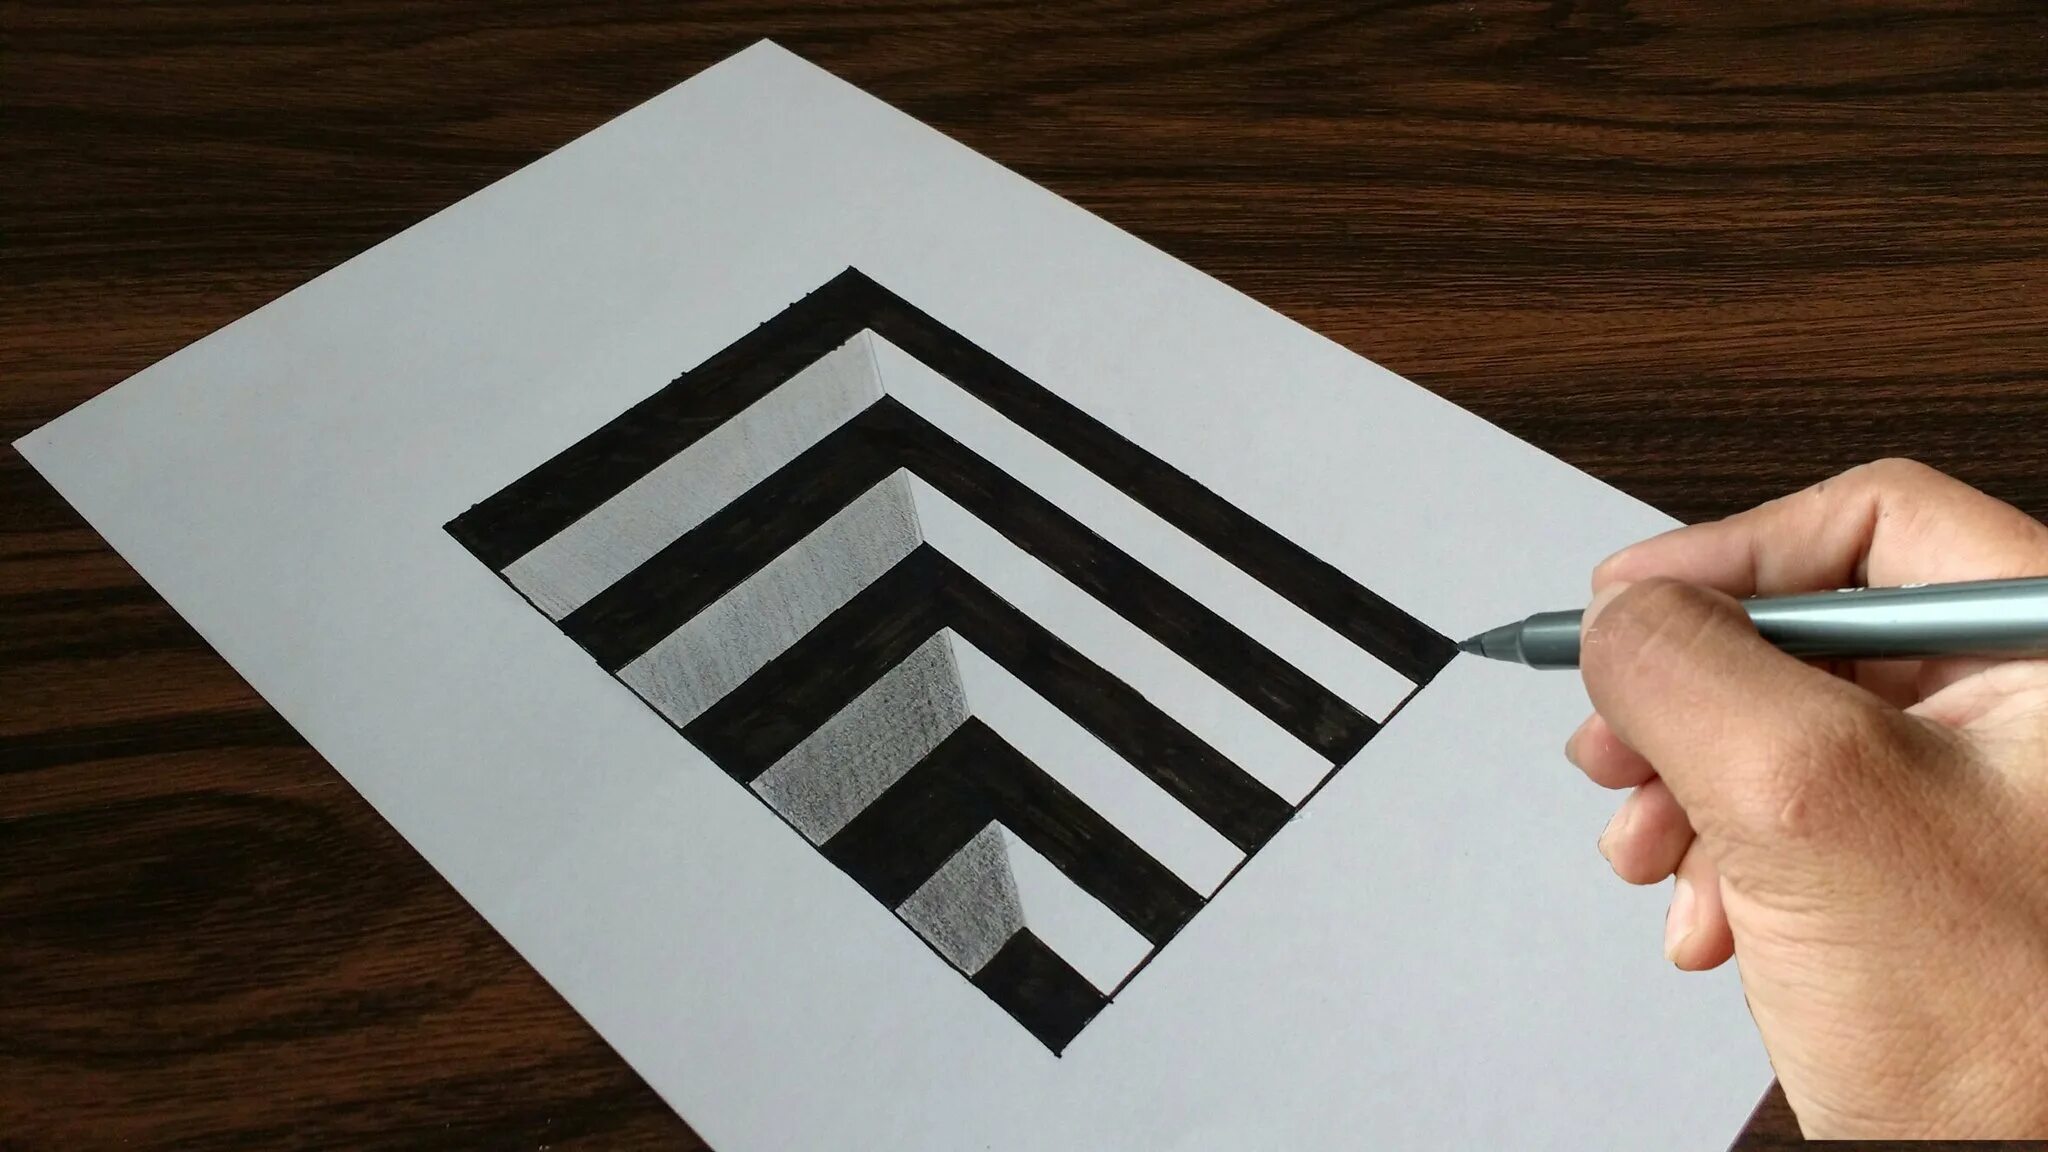 Оптические иллюзии на бумаге. Простые оптические иллюзии на бумаге. Объемные рисунки. Иллюзии карандашом. Три д на бумаге